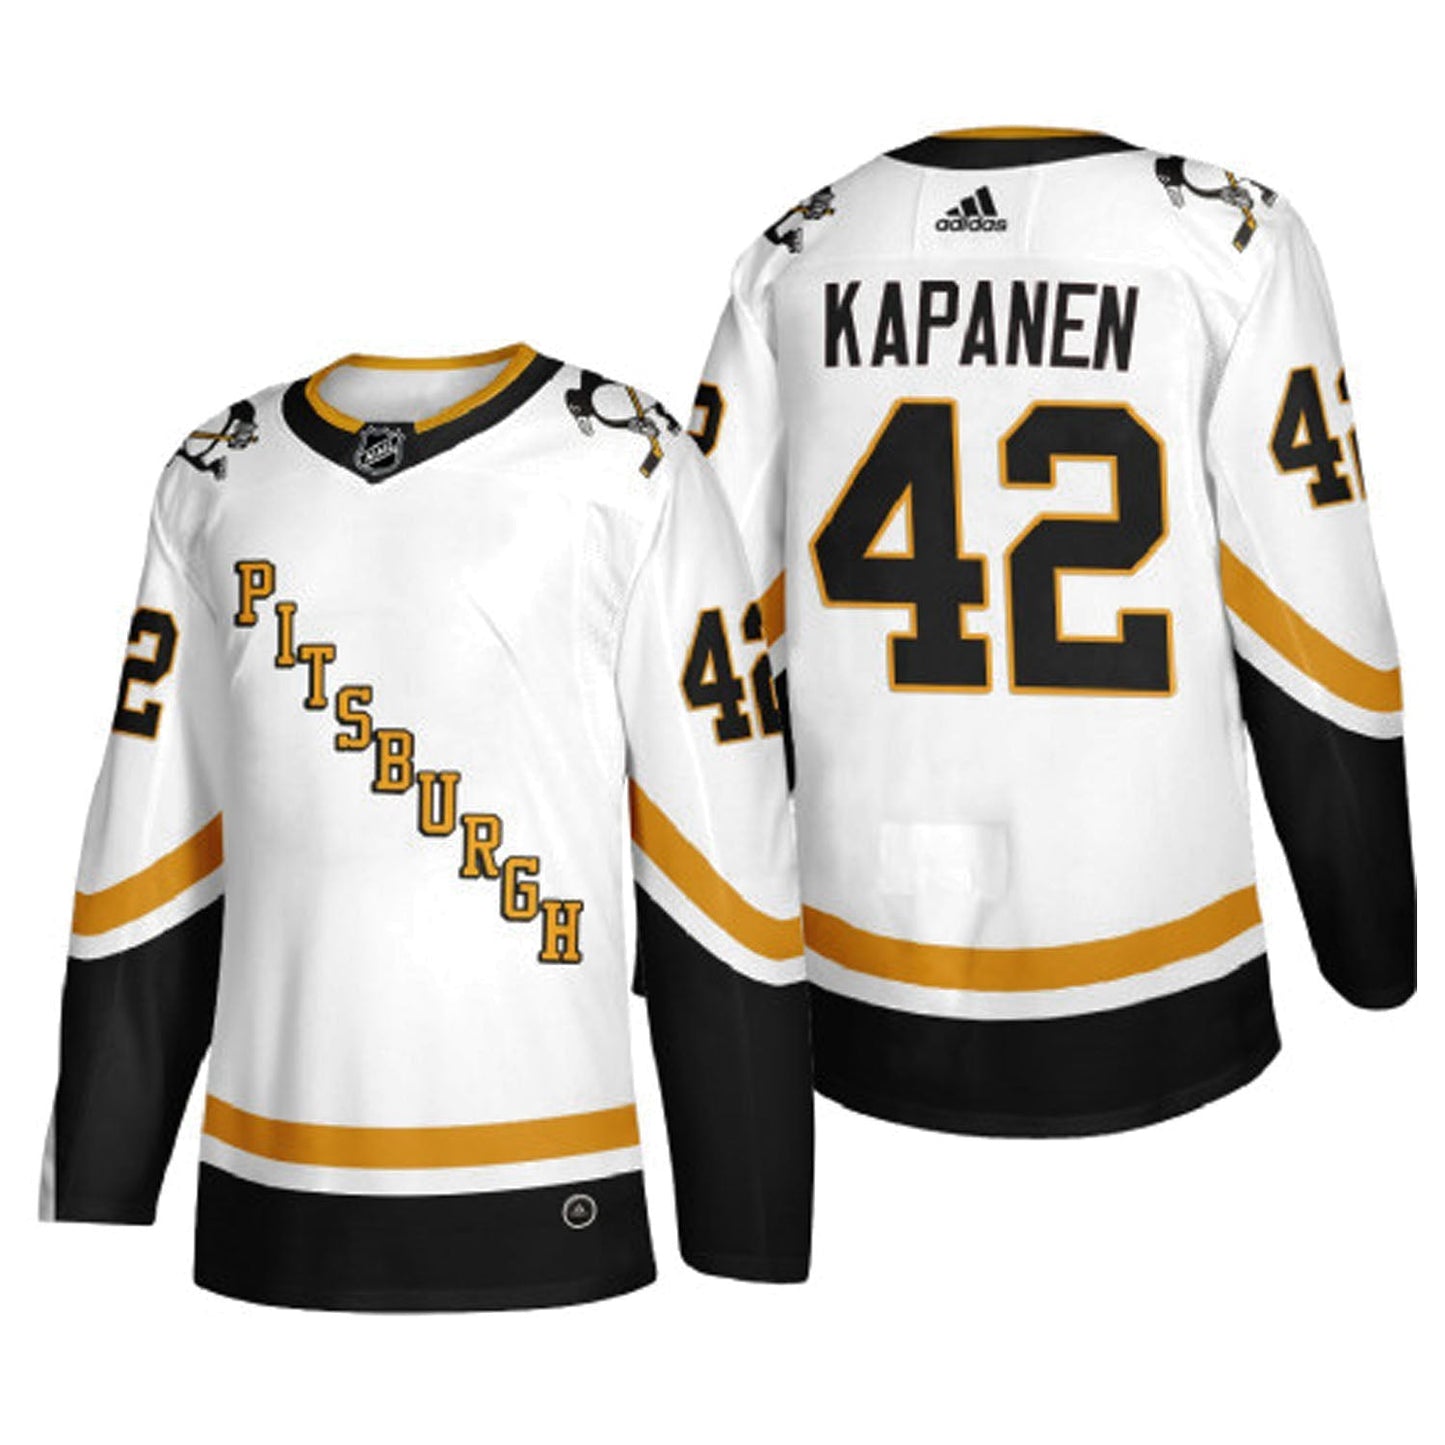 NHL Kasperi Kapanen Pittsburgh Penguins 42 Jersey